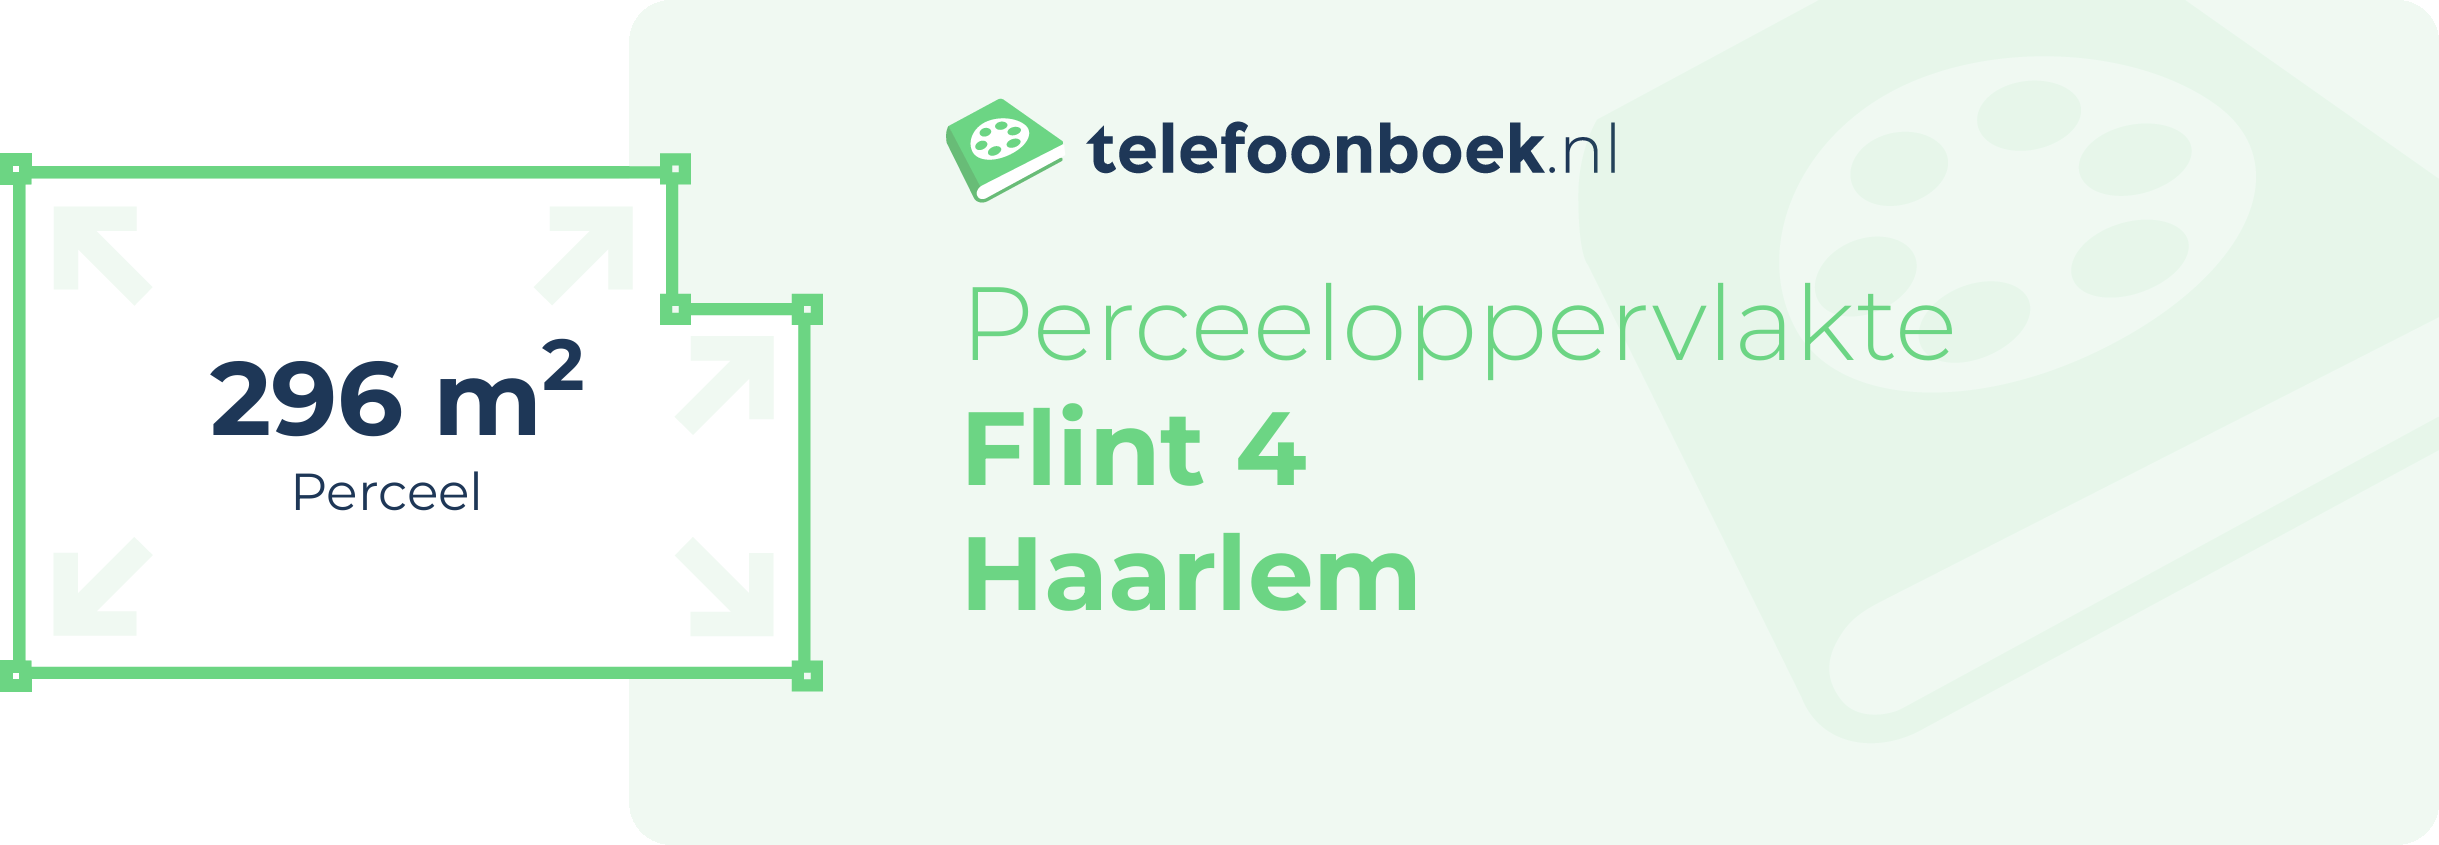 Perceeloppervlakte Flint 4 Haarlem